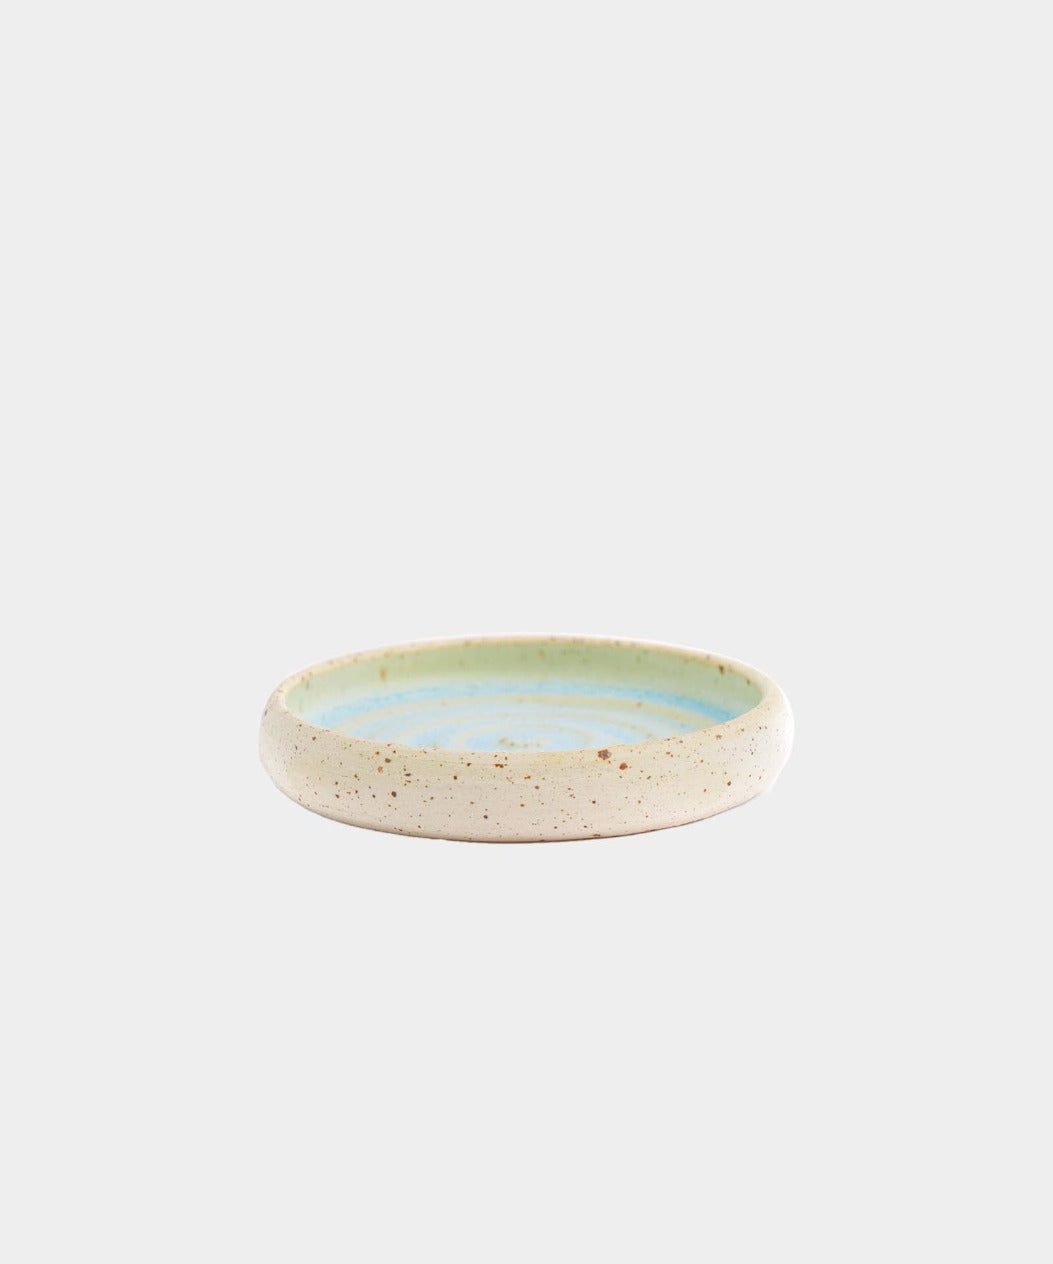 Håndlavet Keramik Sæbeskål | AQUA by Vang | Kerama 1